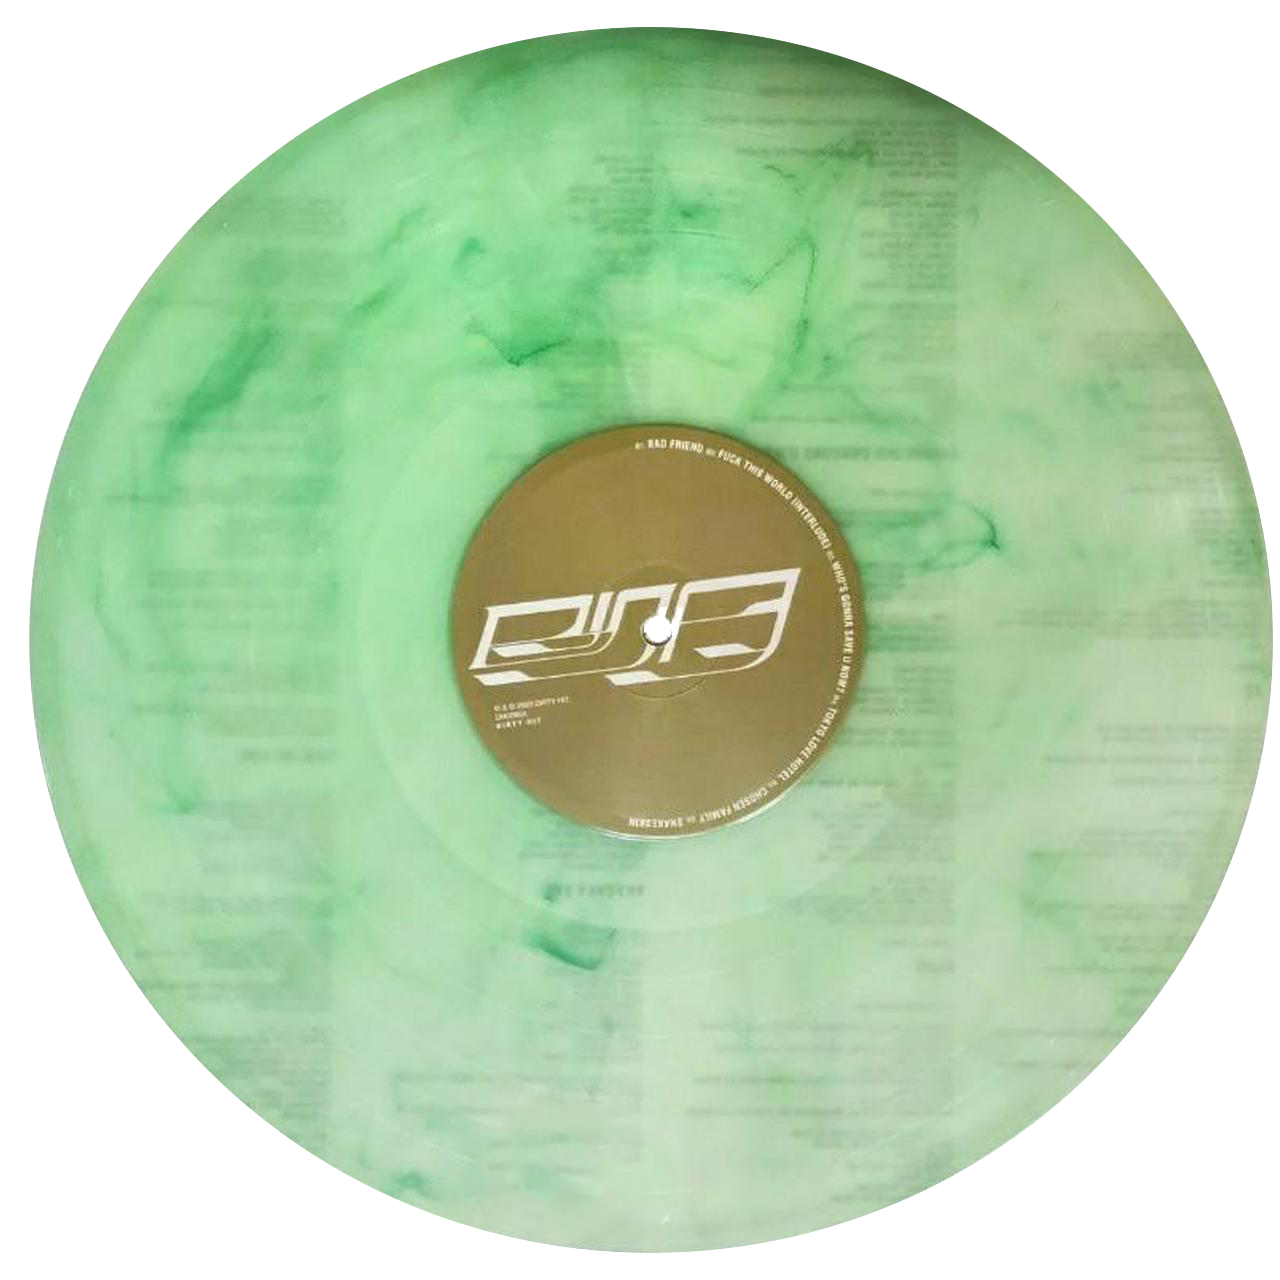 Sawayama (Limited Edition RT Exclusive Clear & Green Swirl Vinyl)